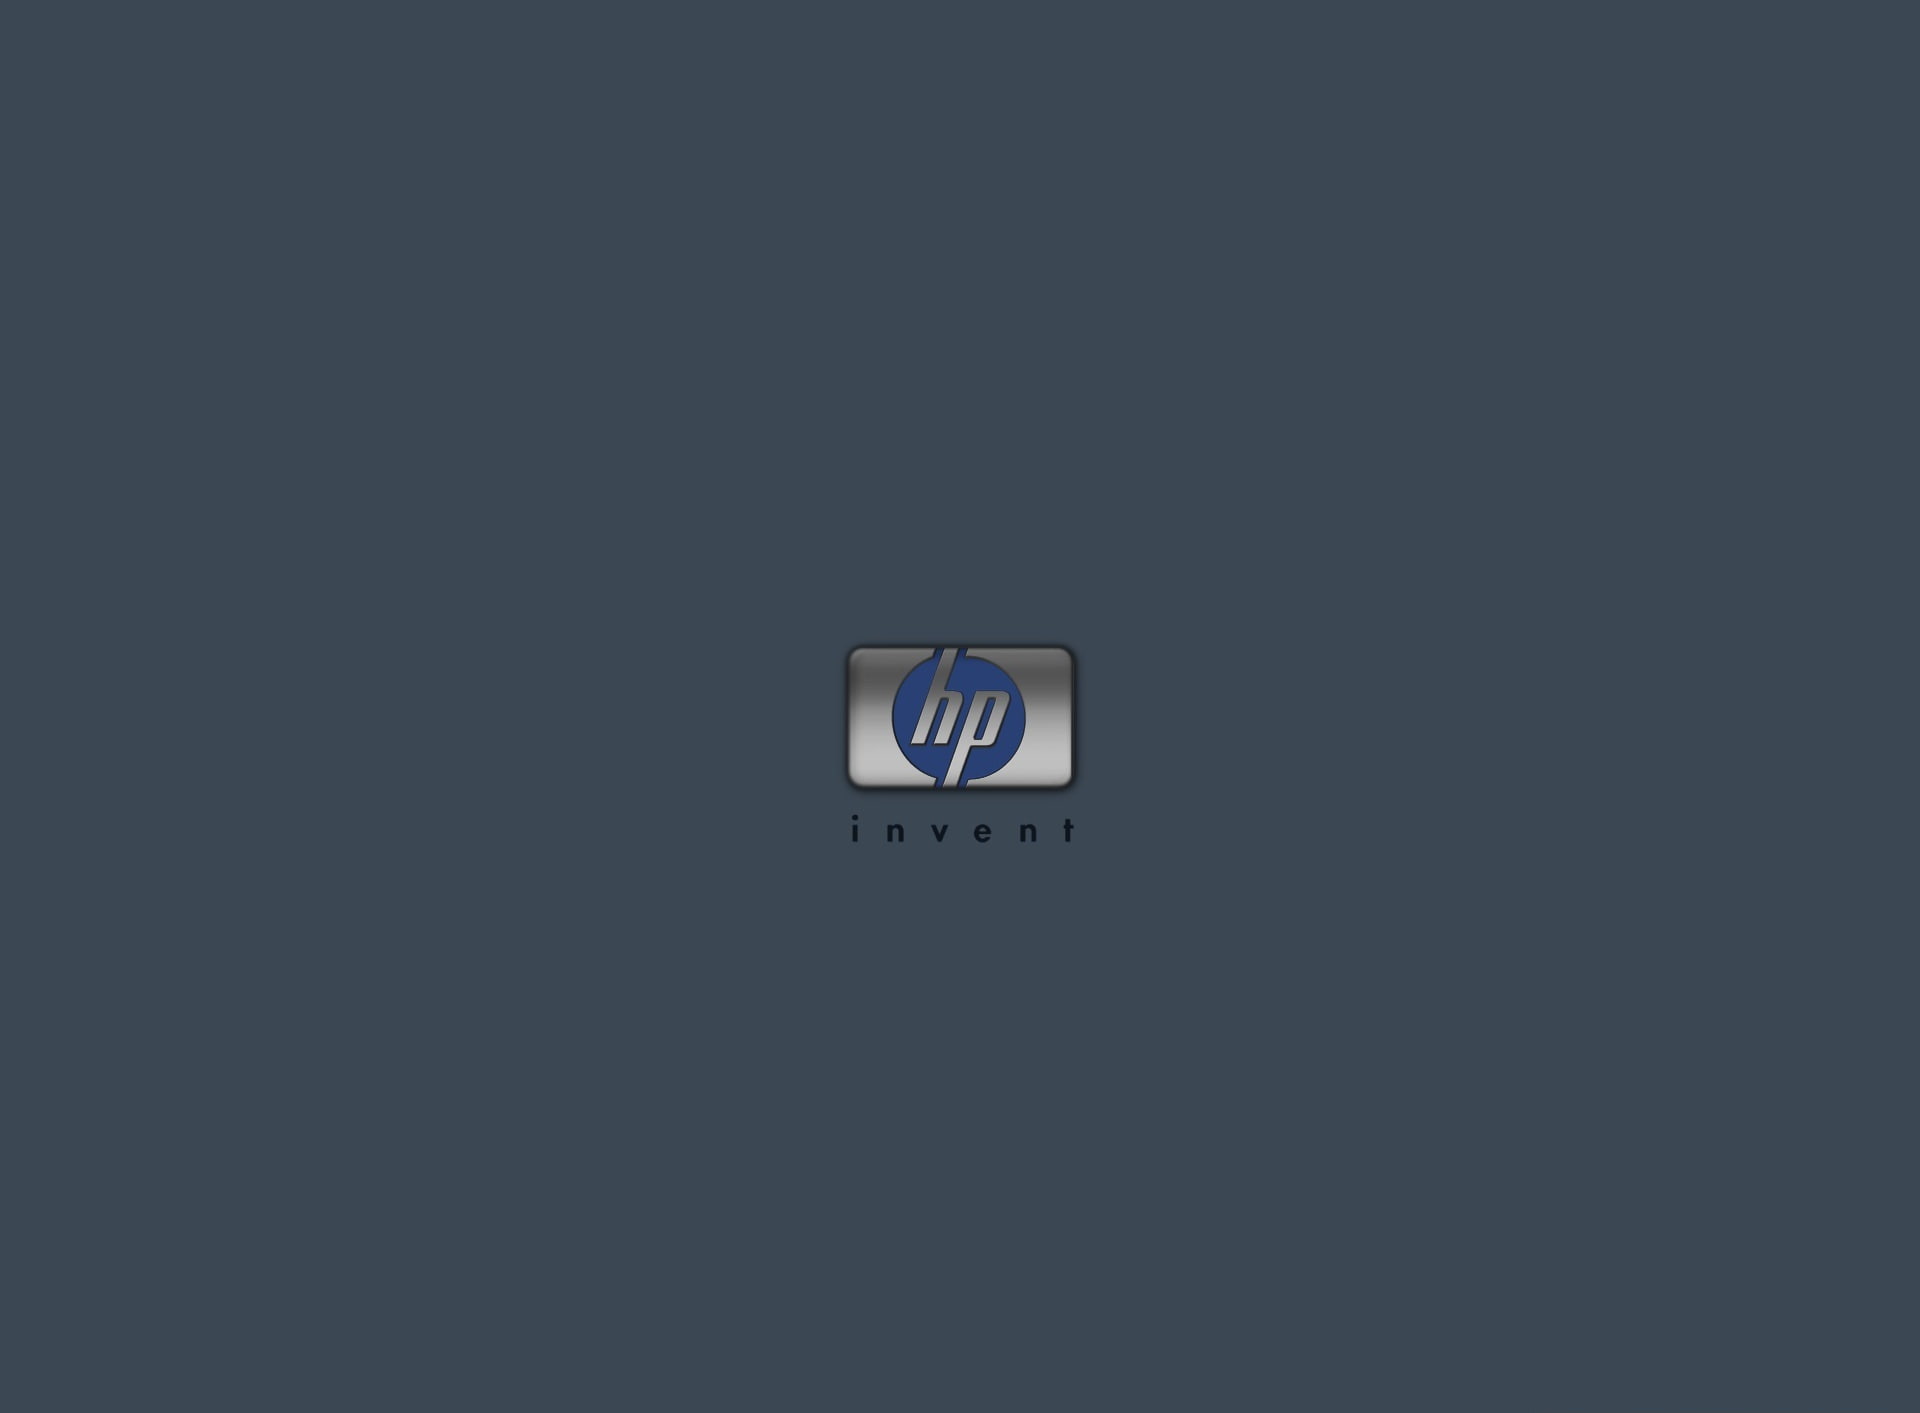 HP Computer, HP Invent logo, Computers, Hardware, symbol, communication